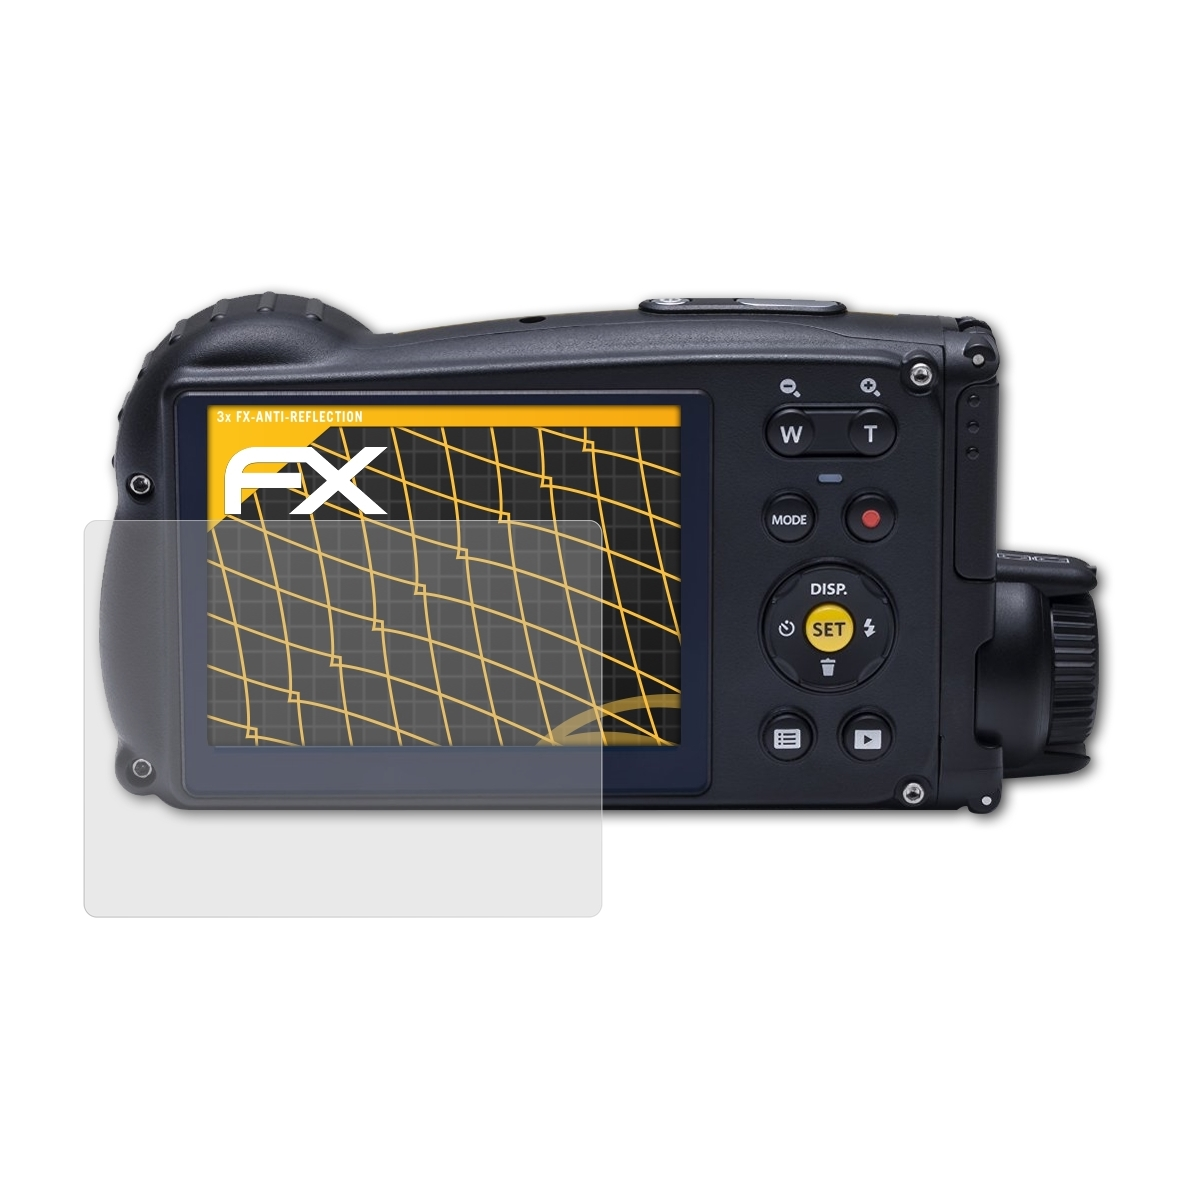 WP1) FX-Antireflex 3x Displayschutz(für PixPro Kodak ATFOLIX